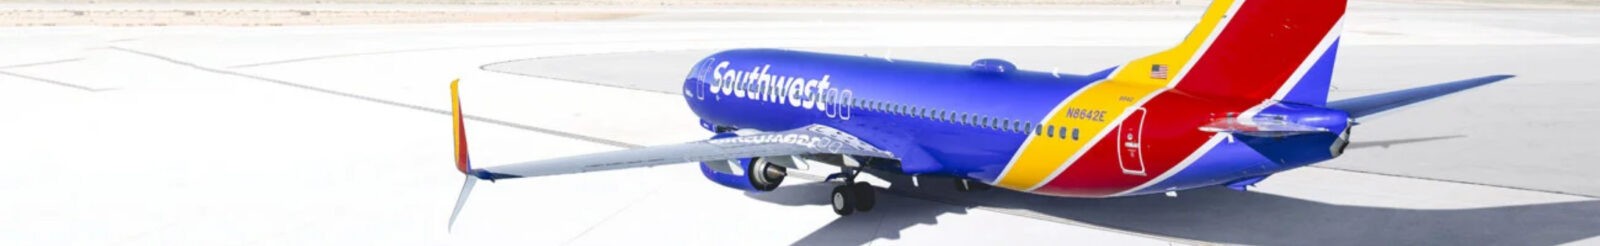 Southwest Destination 225 - Airline Partnerships - Domestic Flight School